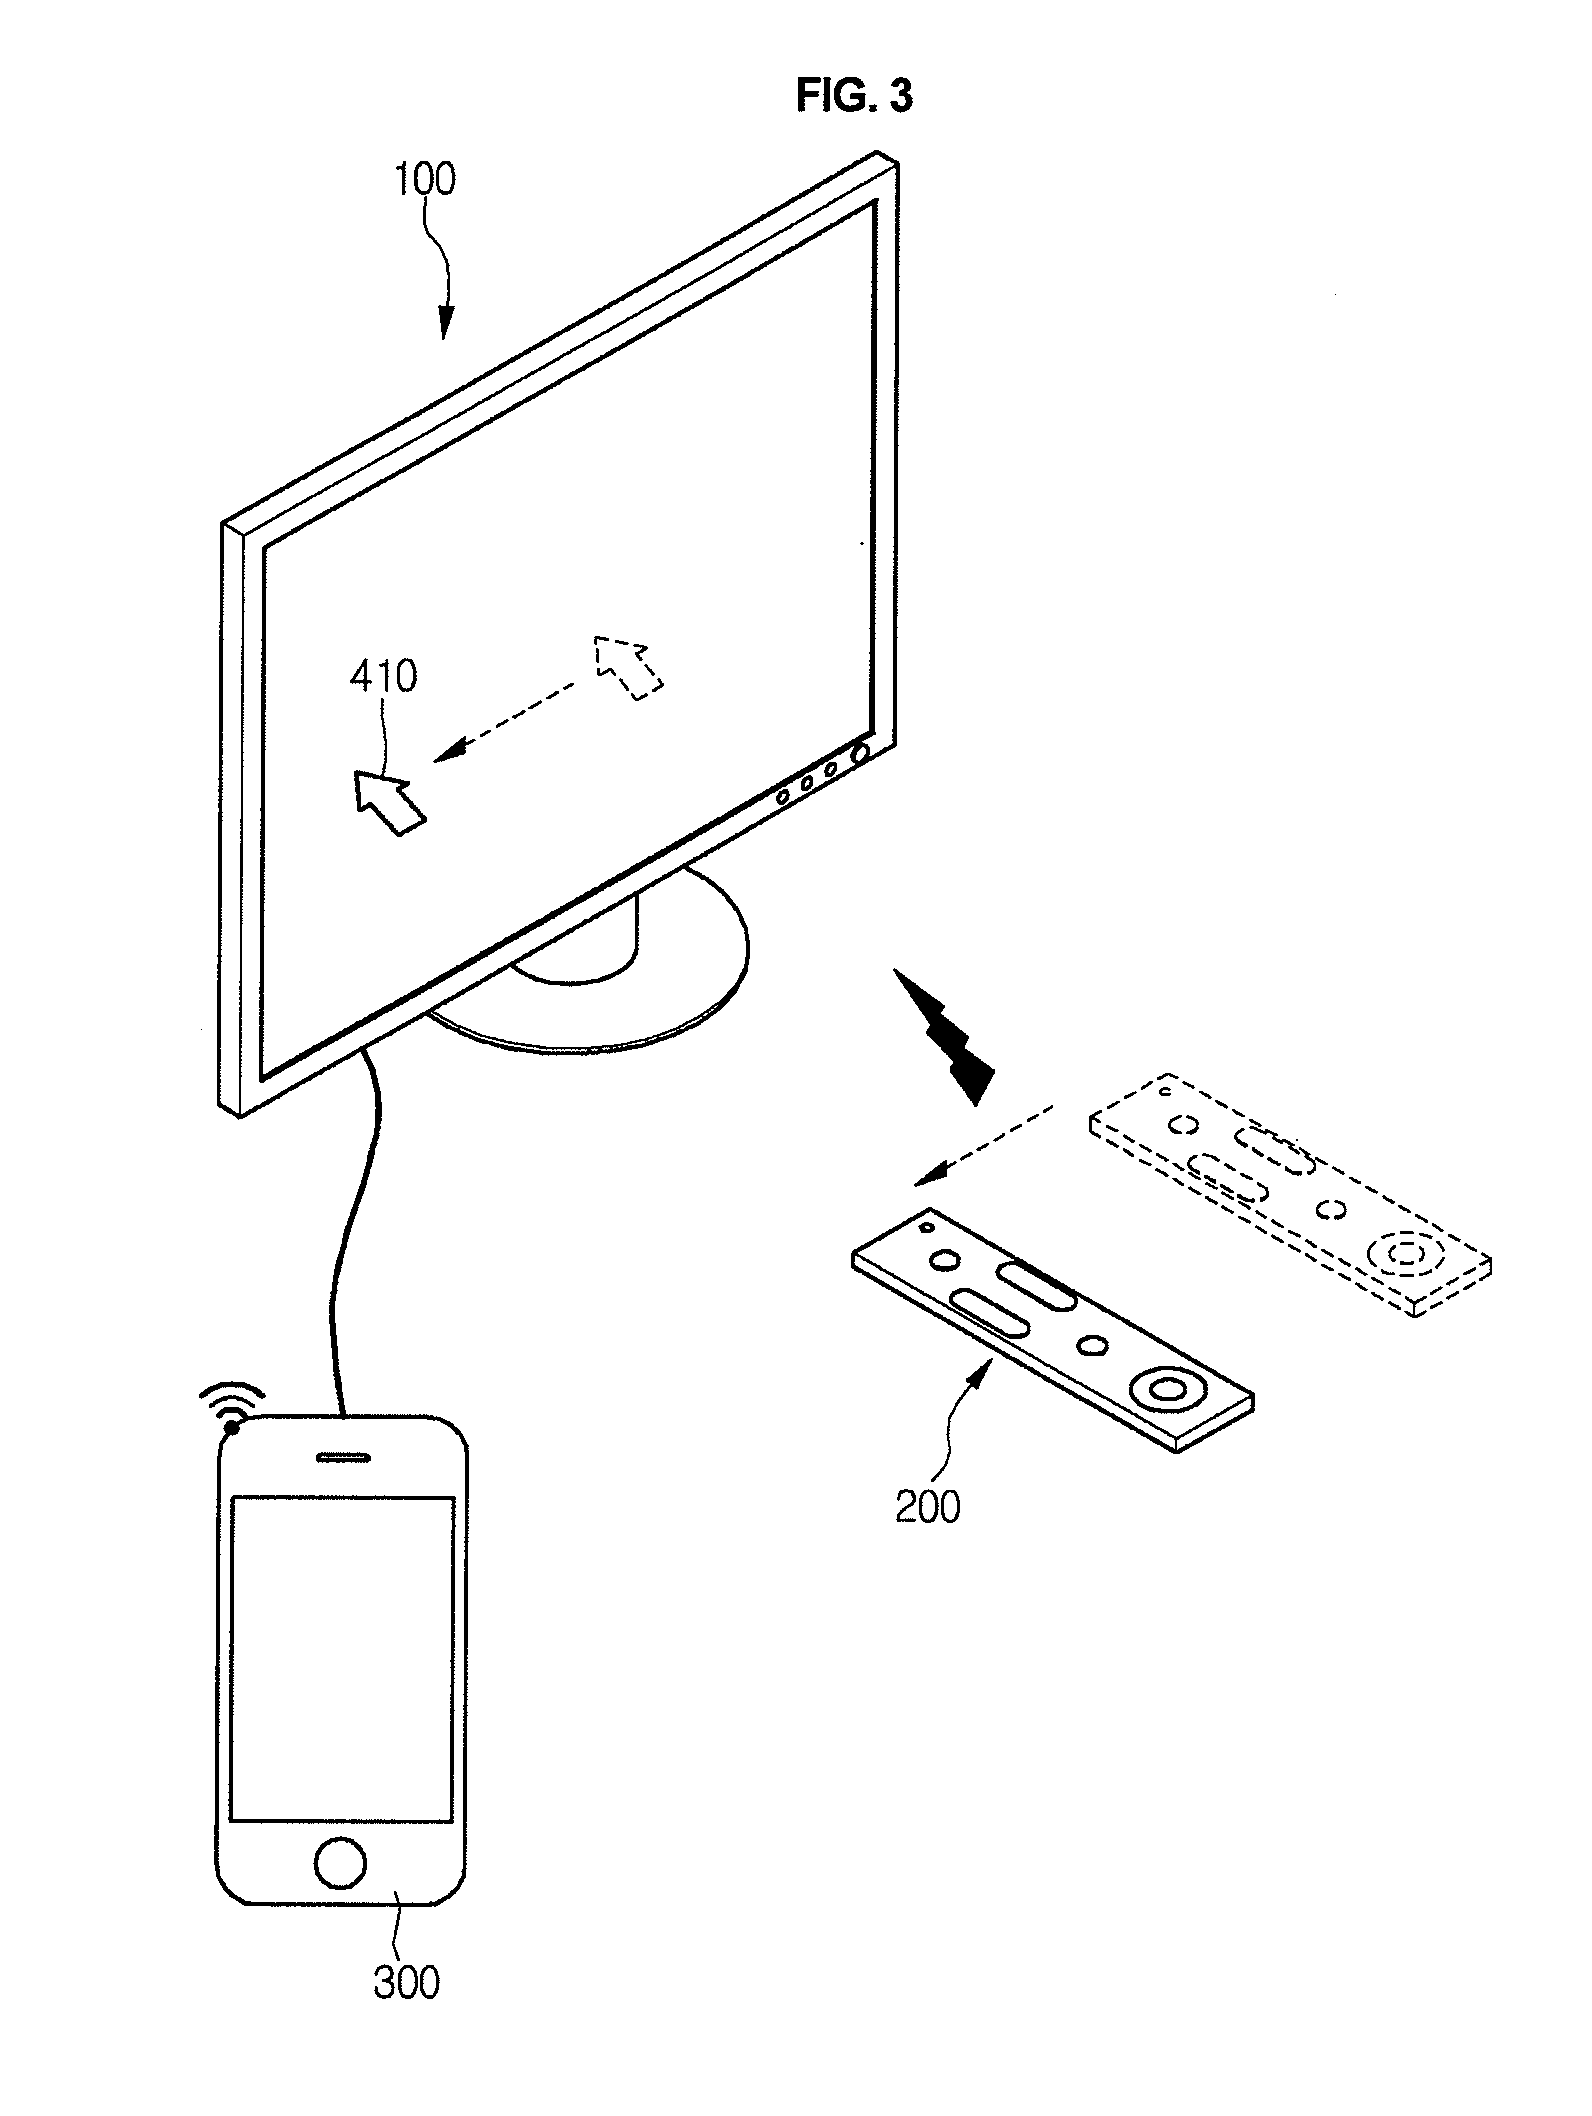 Image display method and apparatus